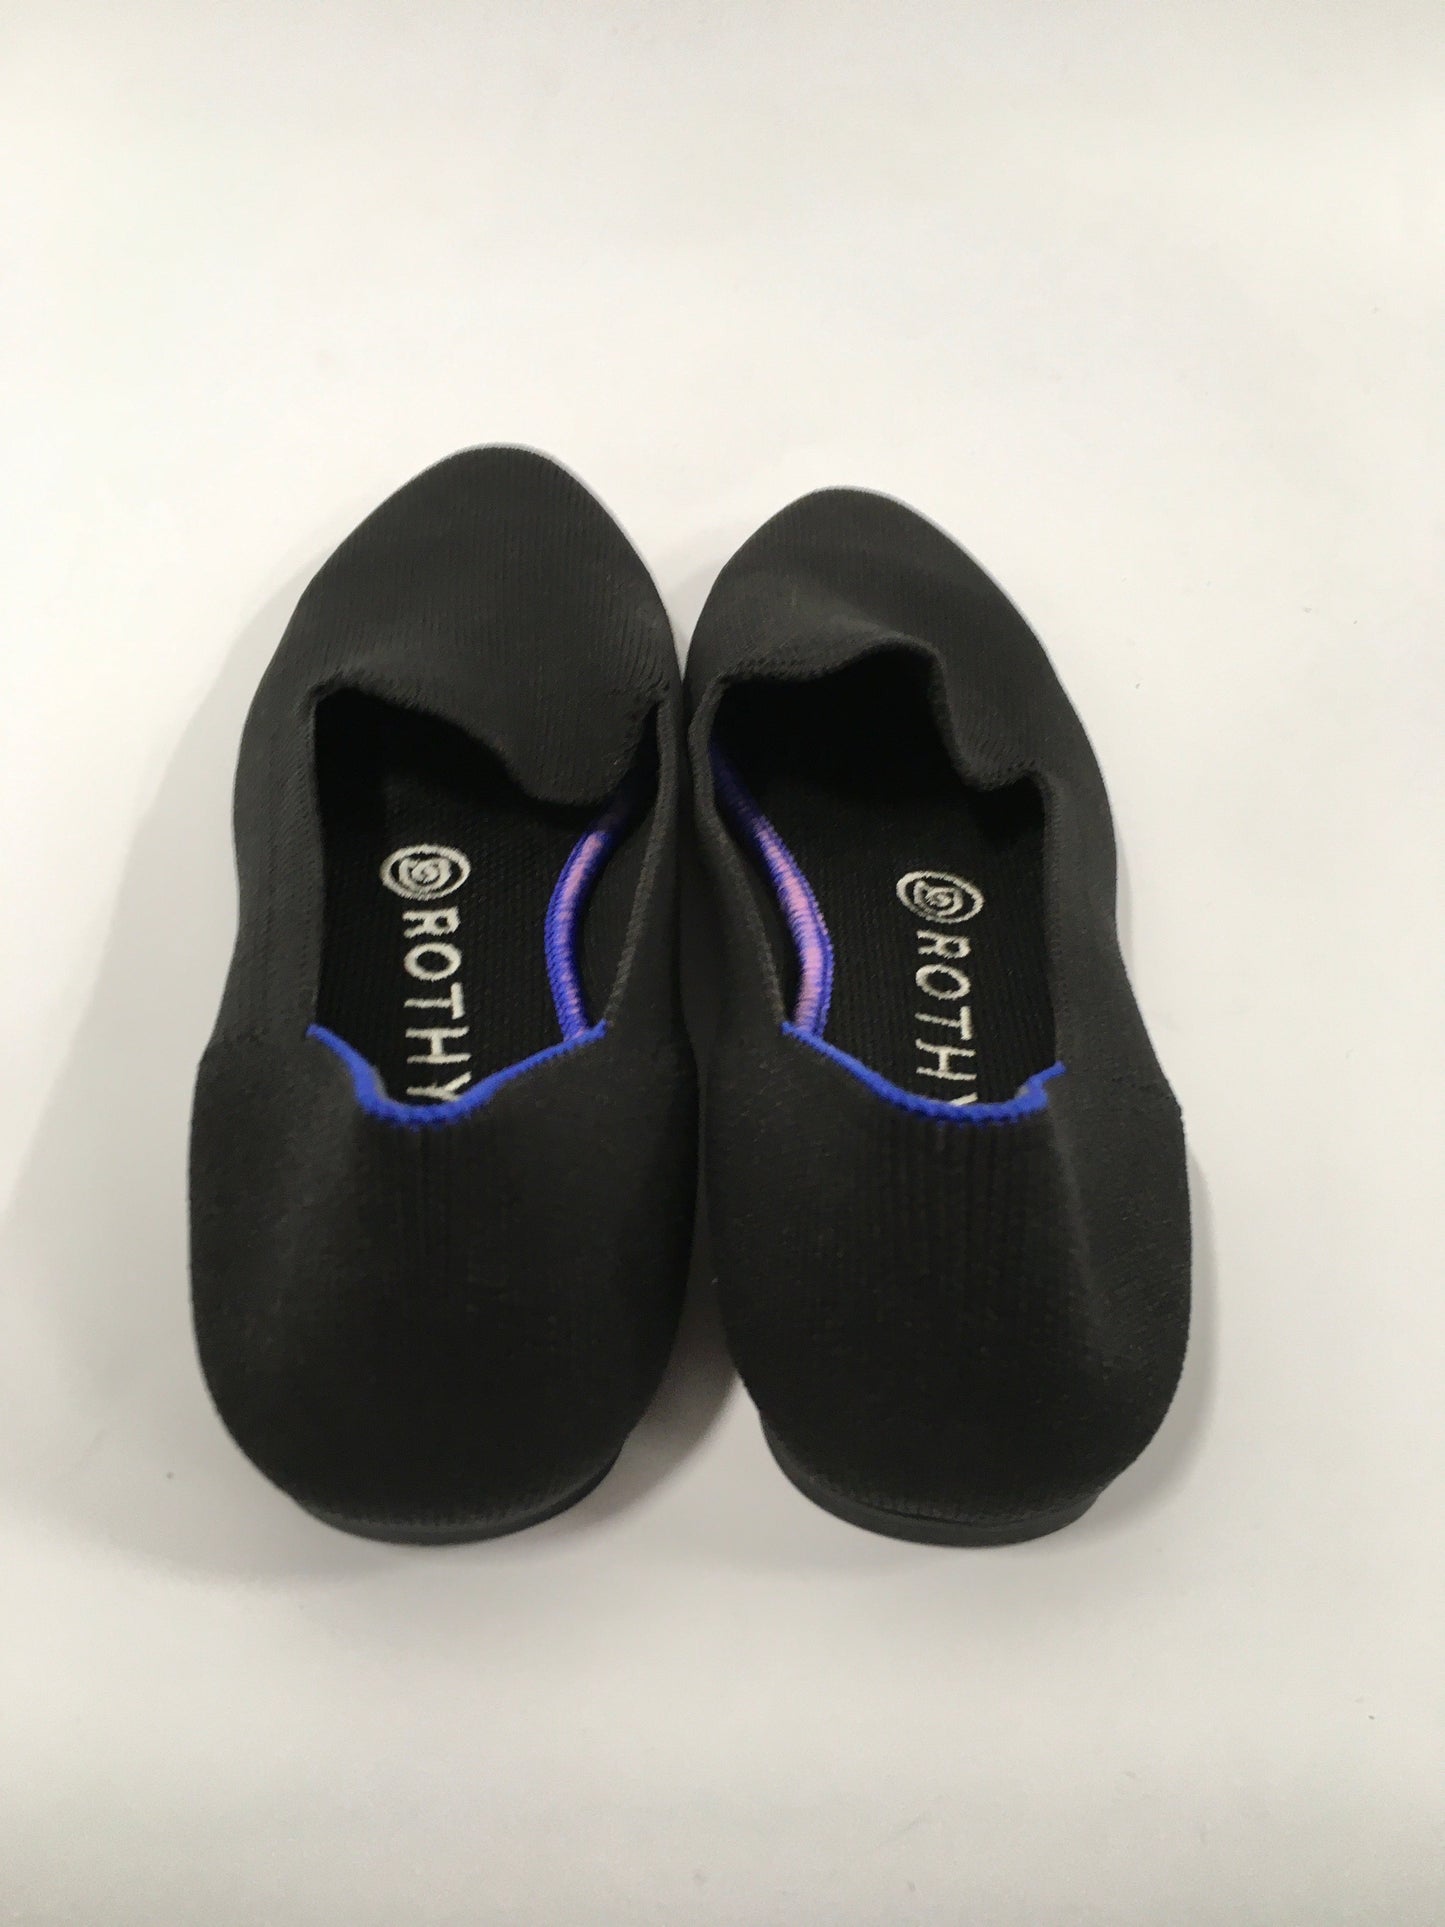 Black Shoes Flats Ballet Rothys, Size 7